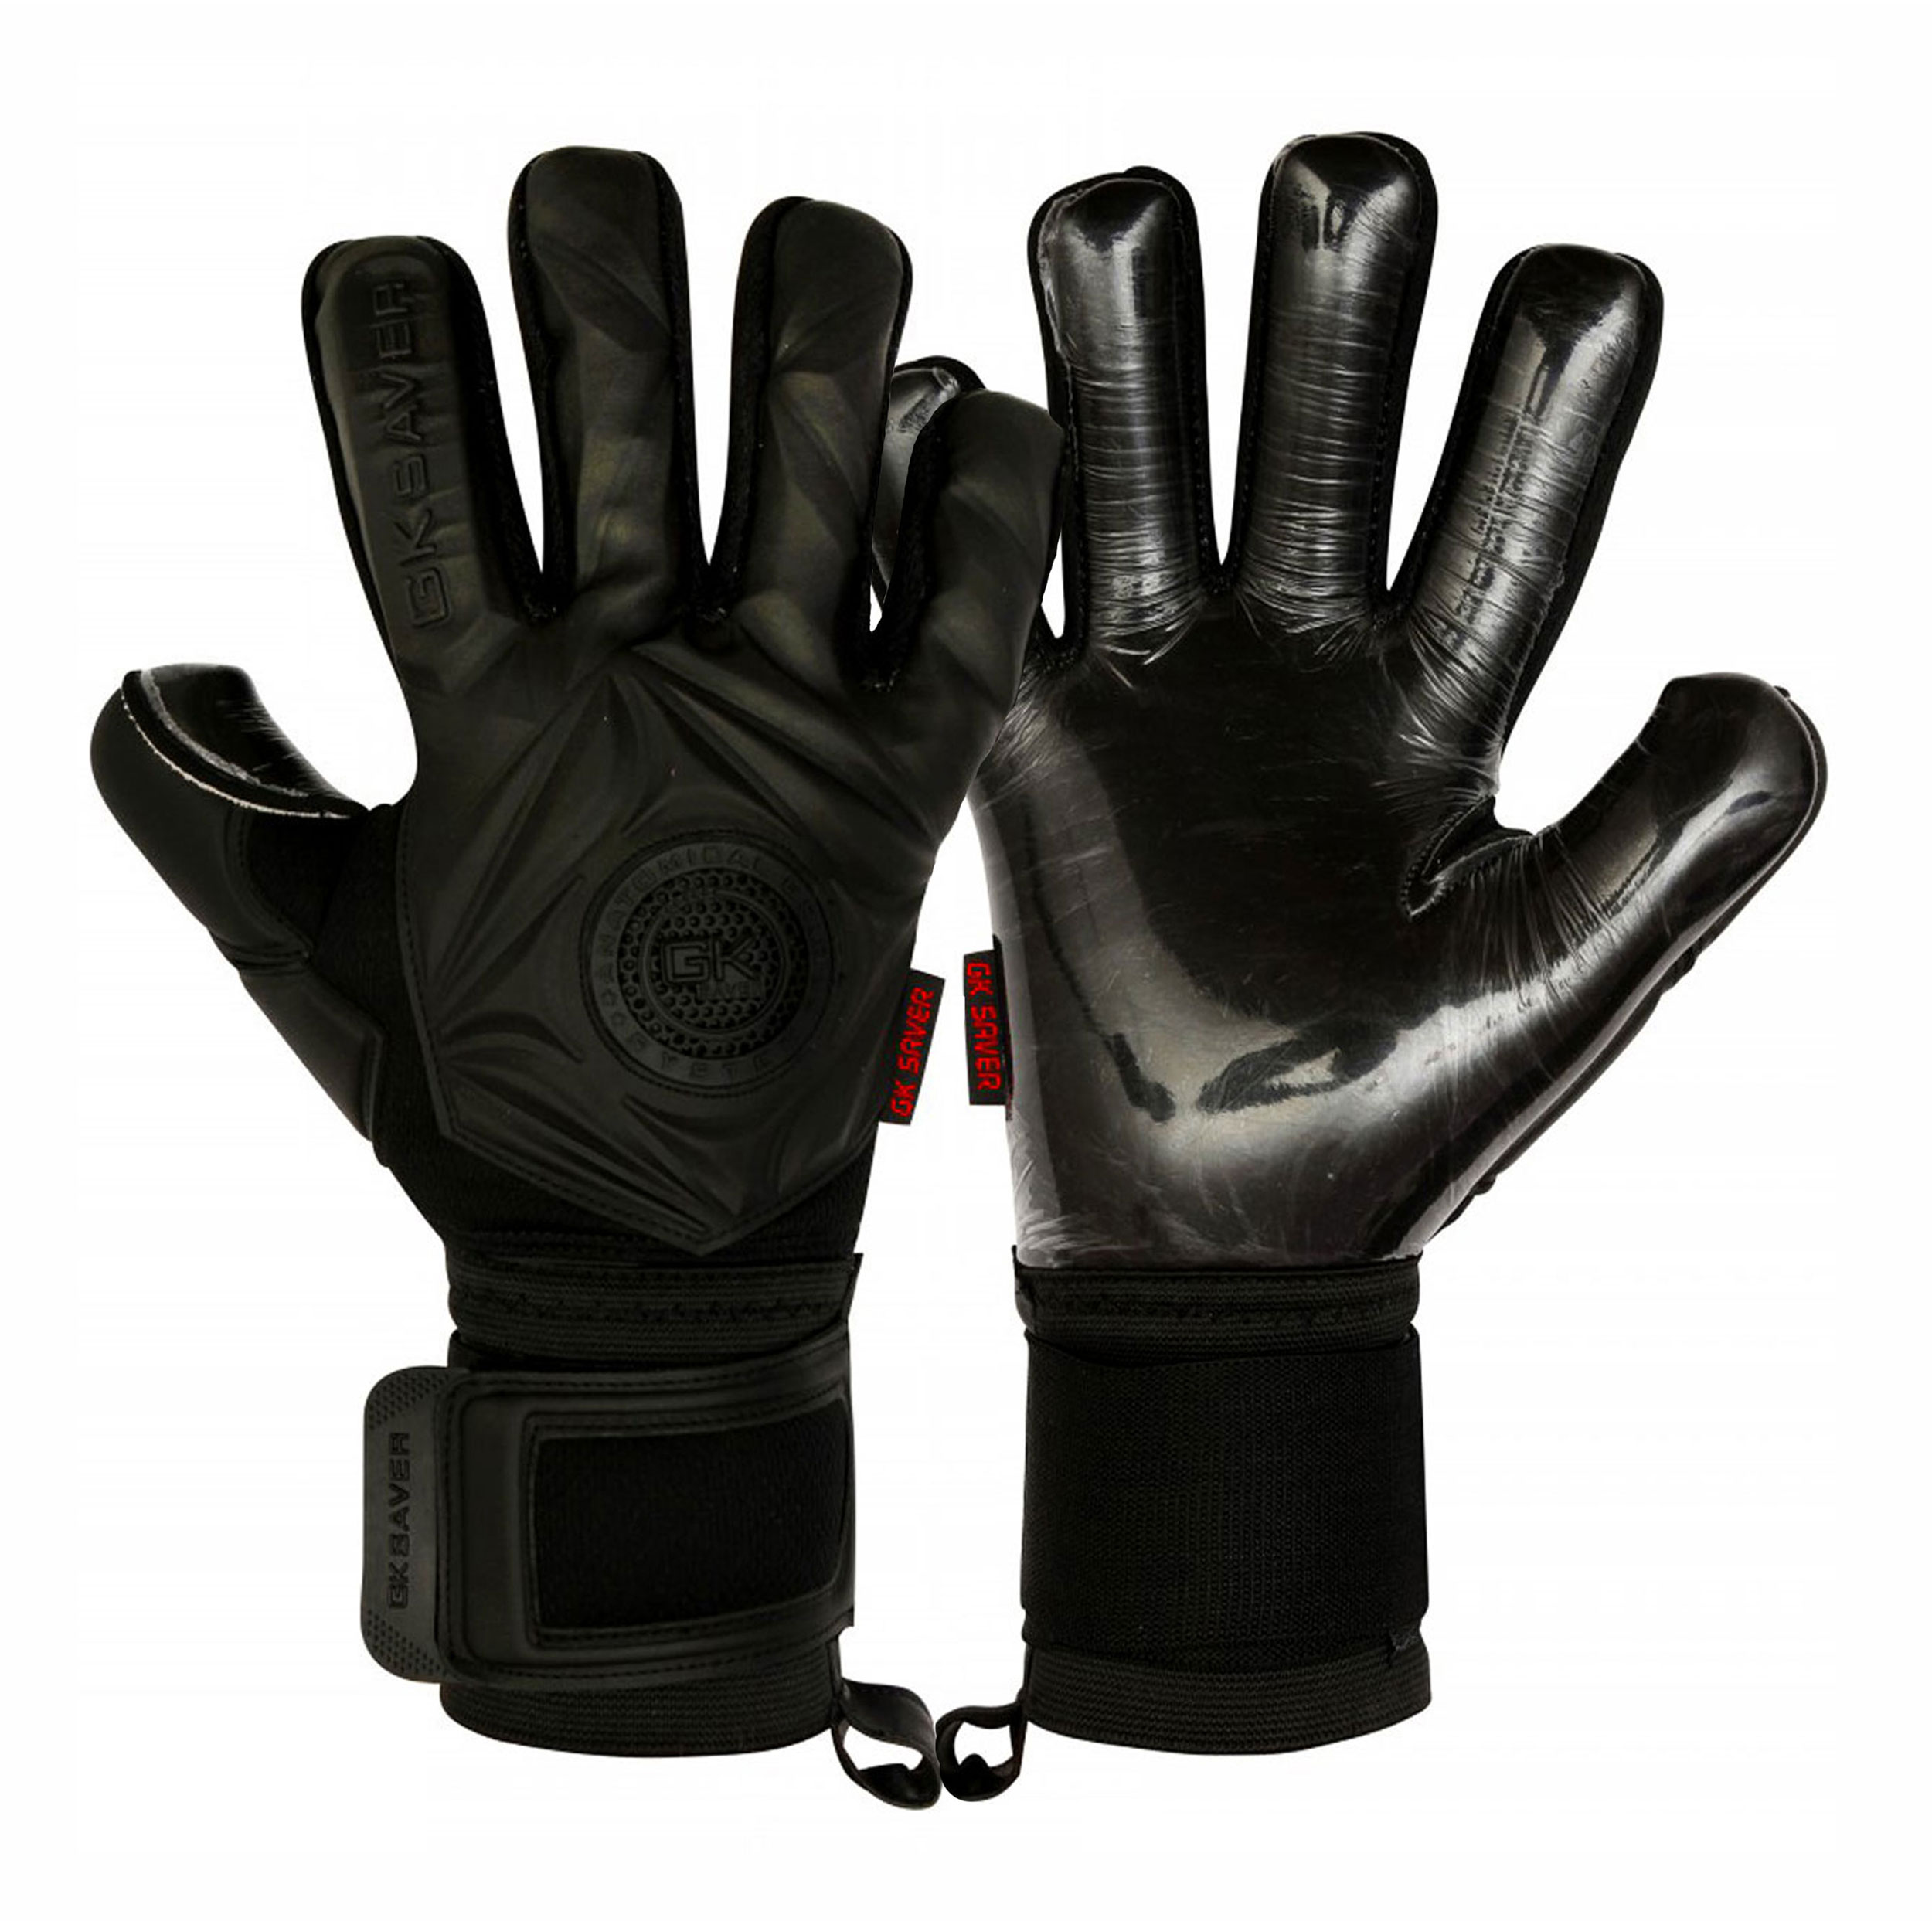 GK Saver Professional Football Goalkeeper Gloves Prime Pro Gold/black Size 6-11 